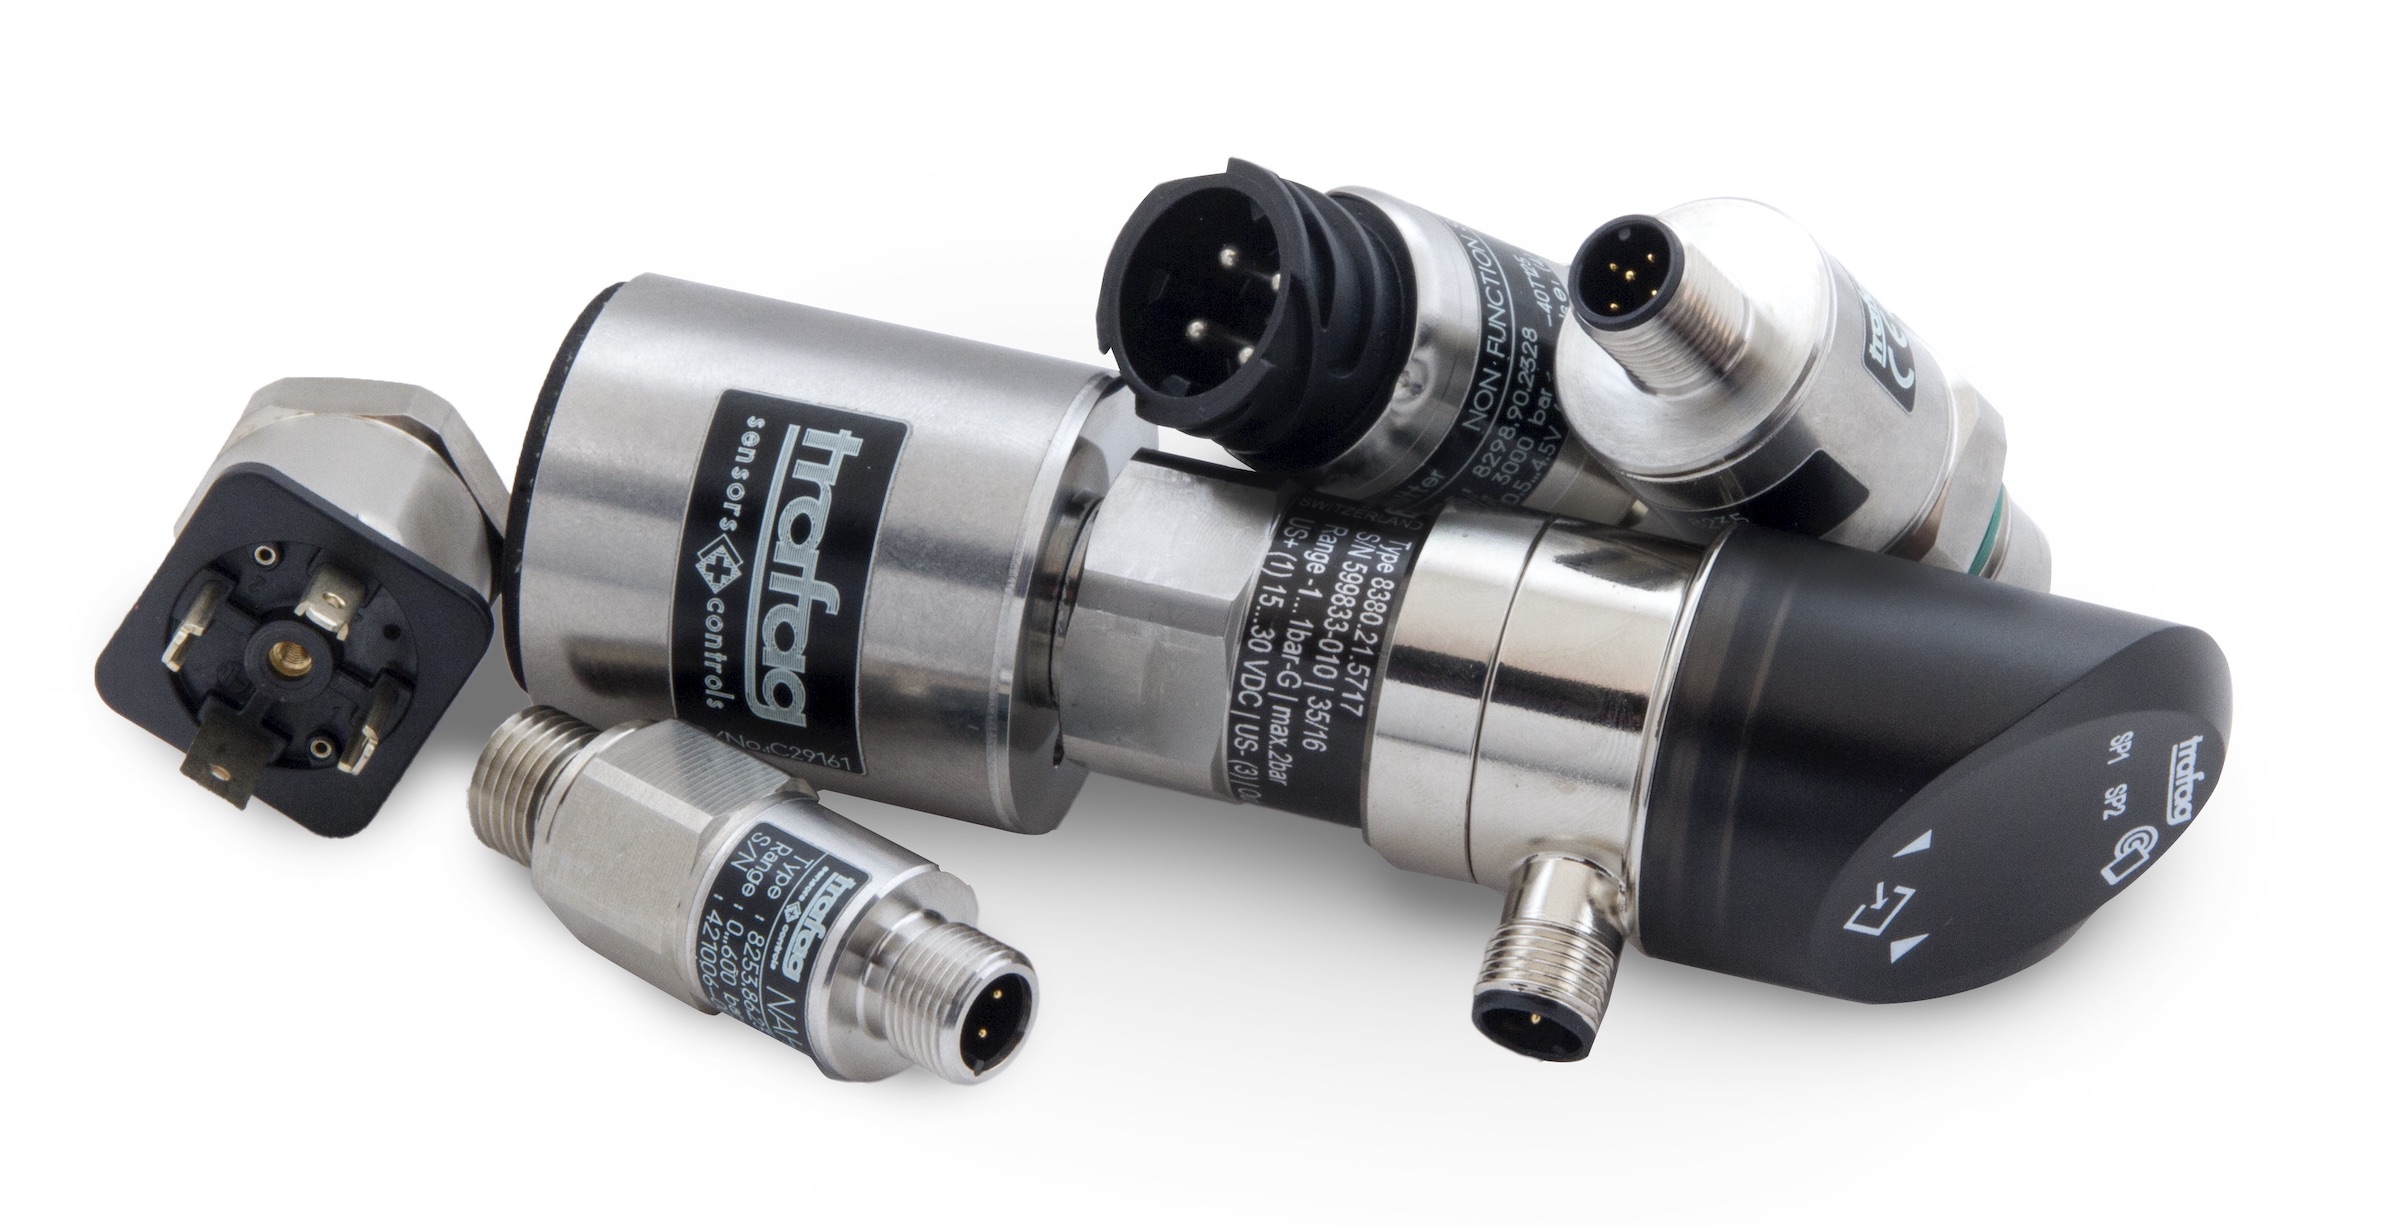 Trafag Pressure Sensor products from PEI-Genesis